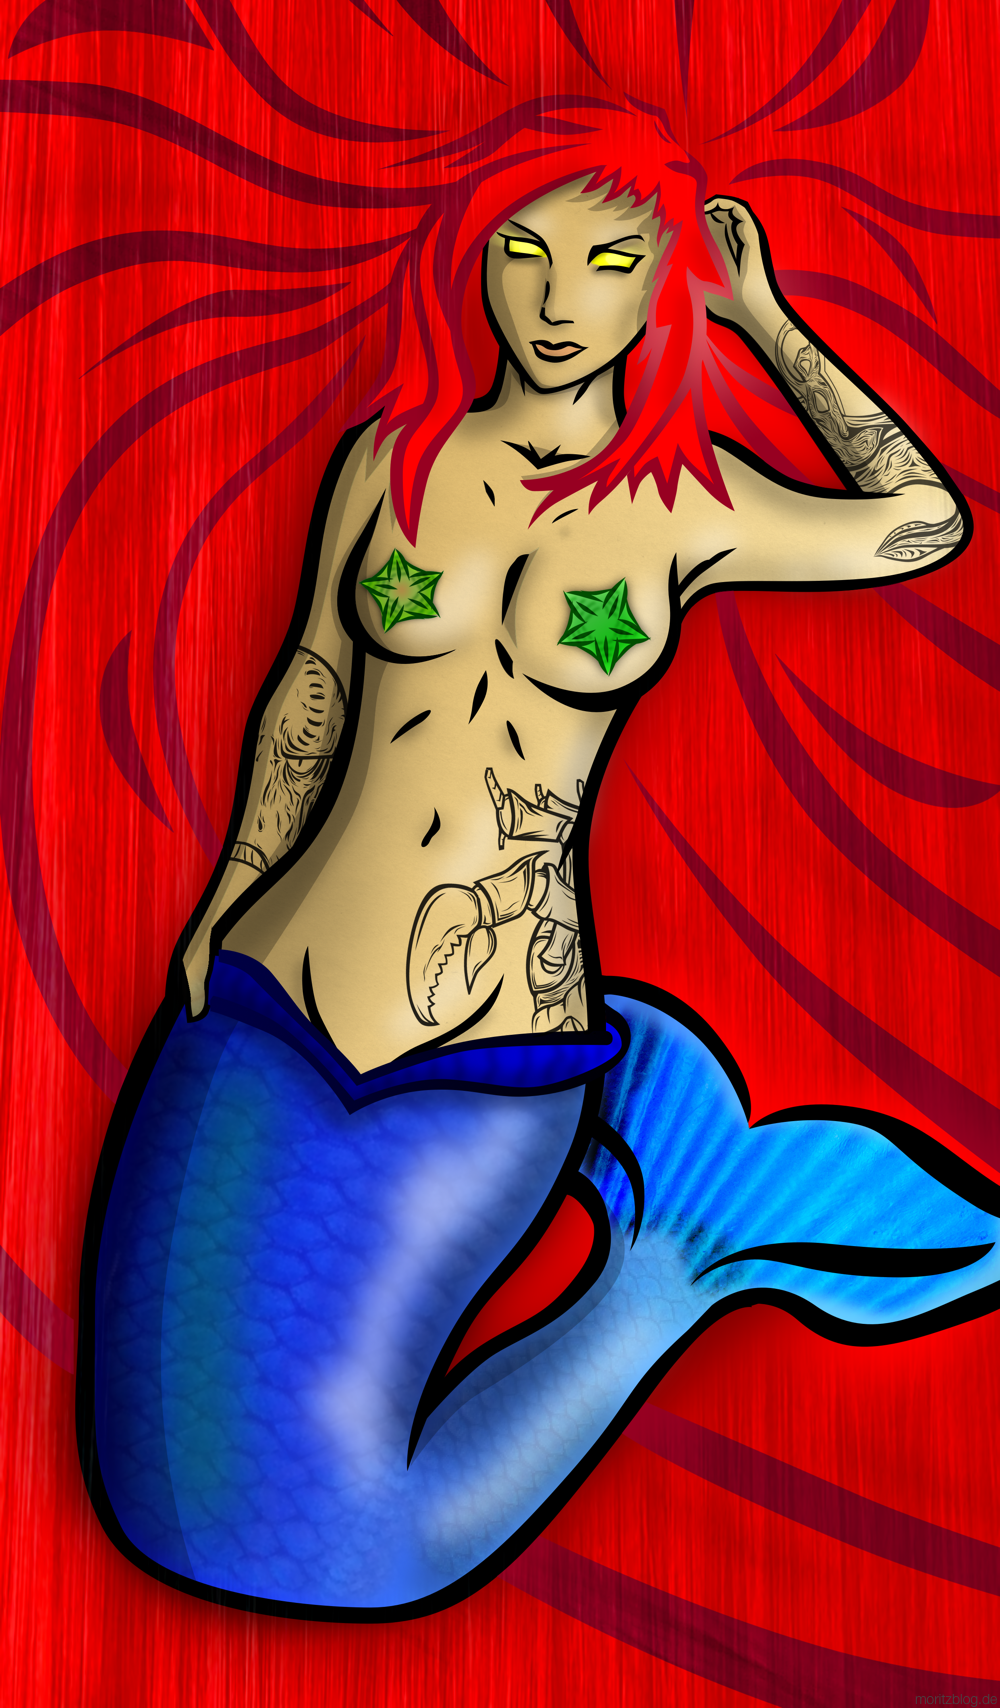 Mermaid